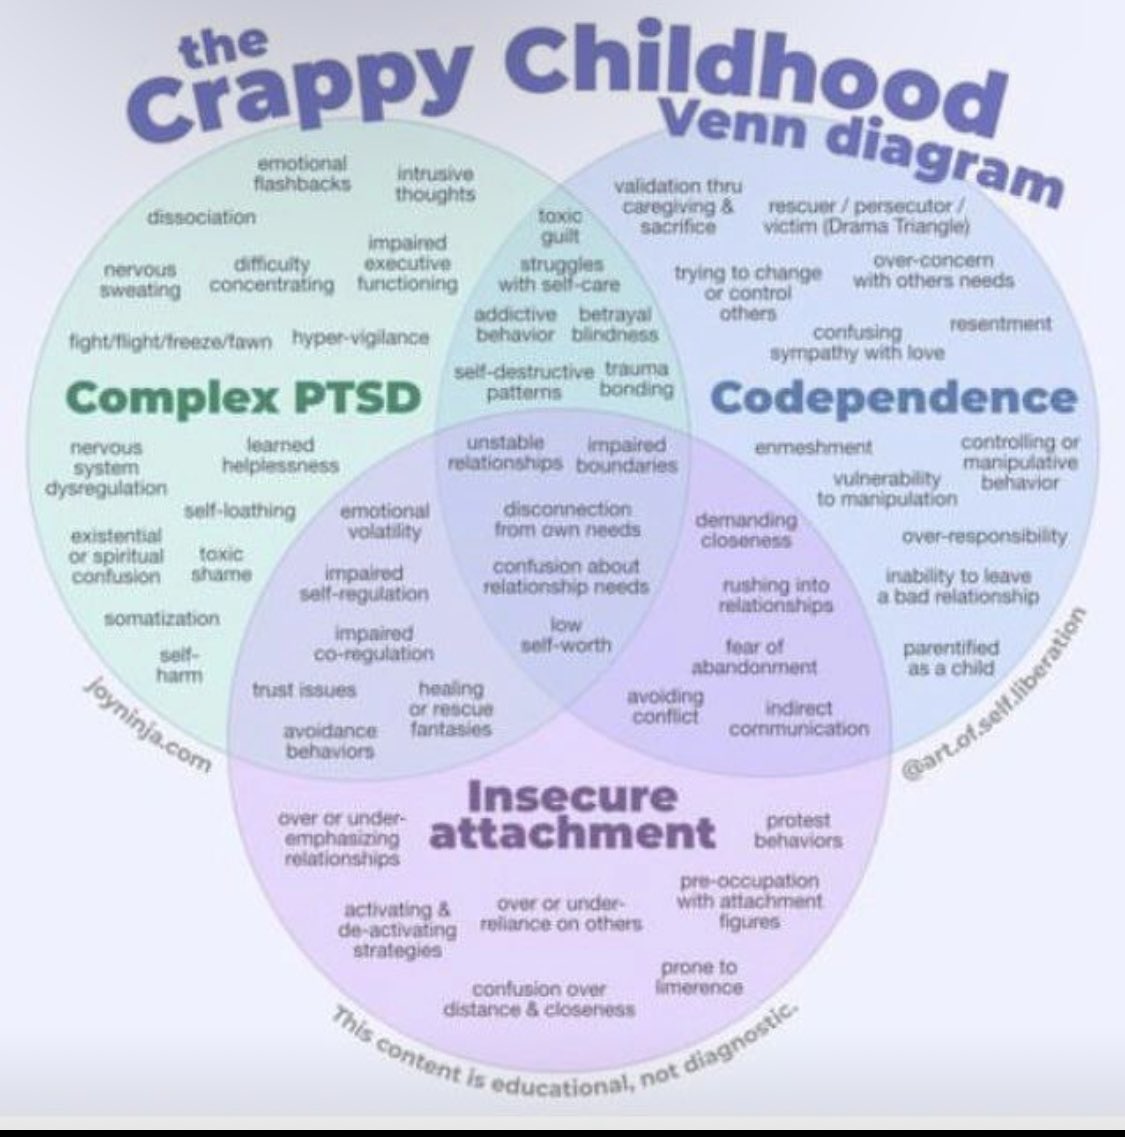 #cptsd #codependency #attachment #emotions #childhoodtrauma #schemas #traits #braindevelopment #traumaresponse